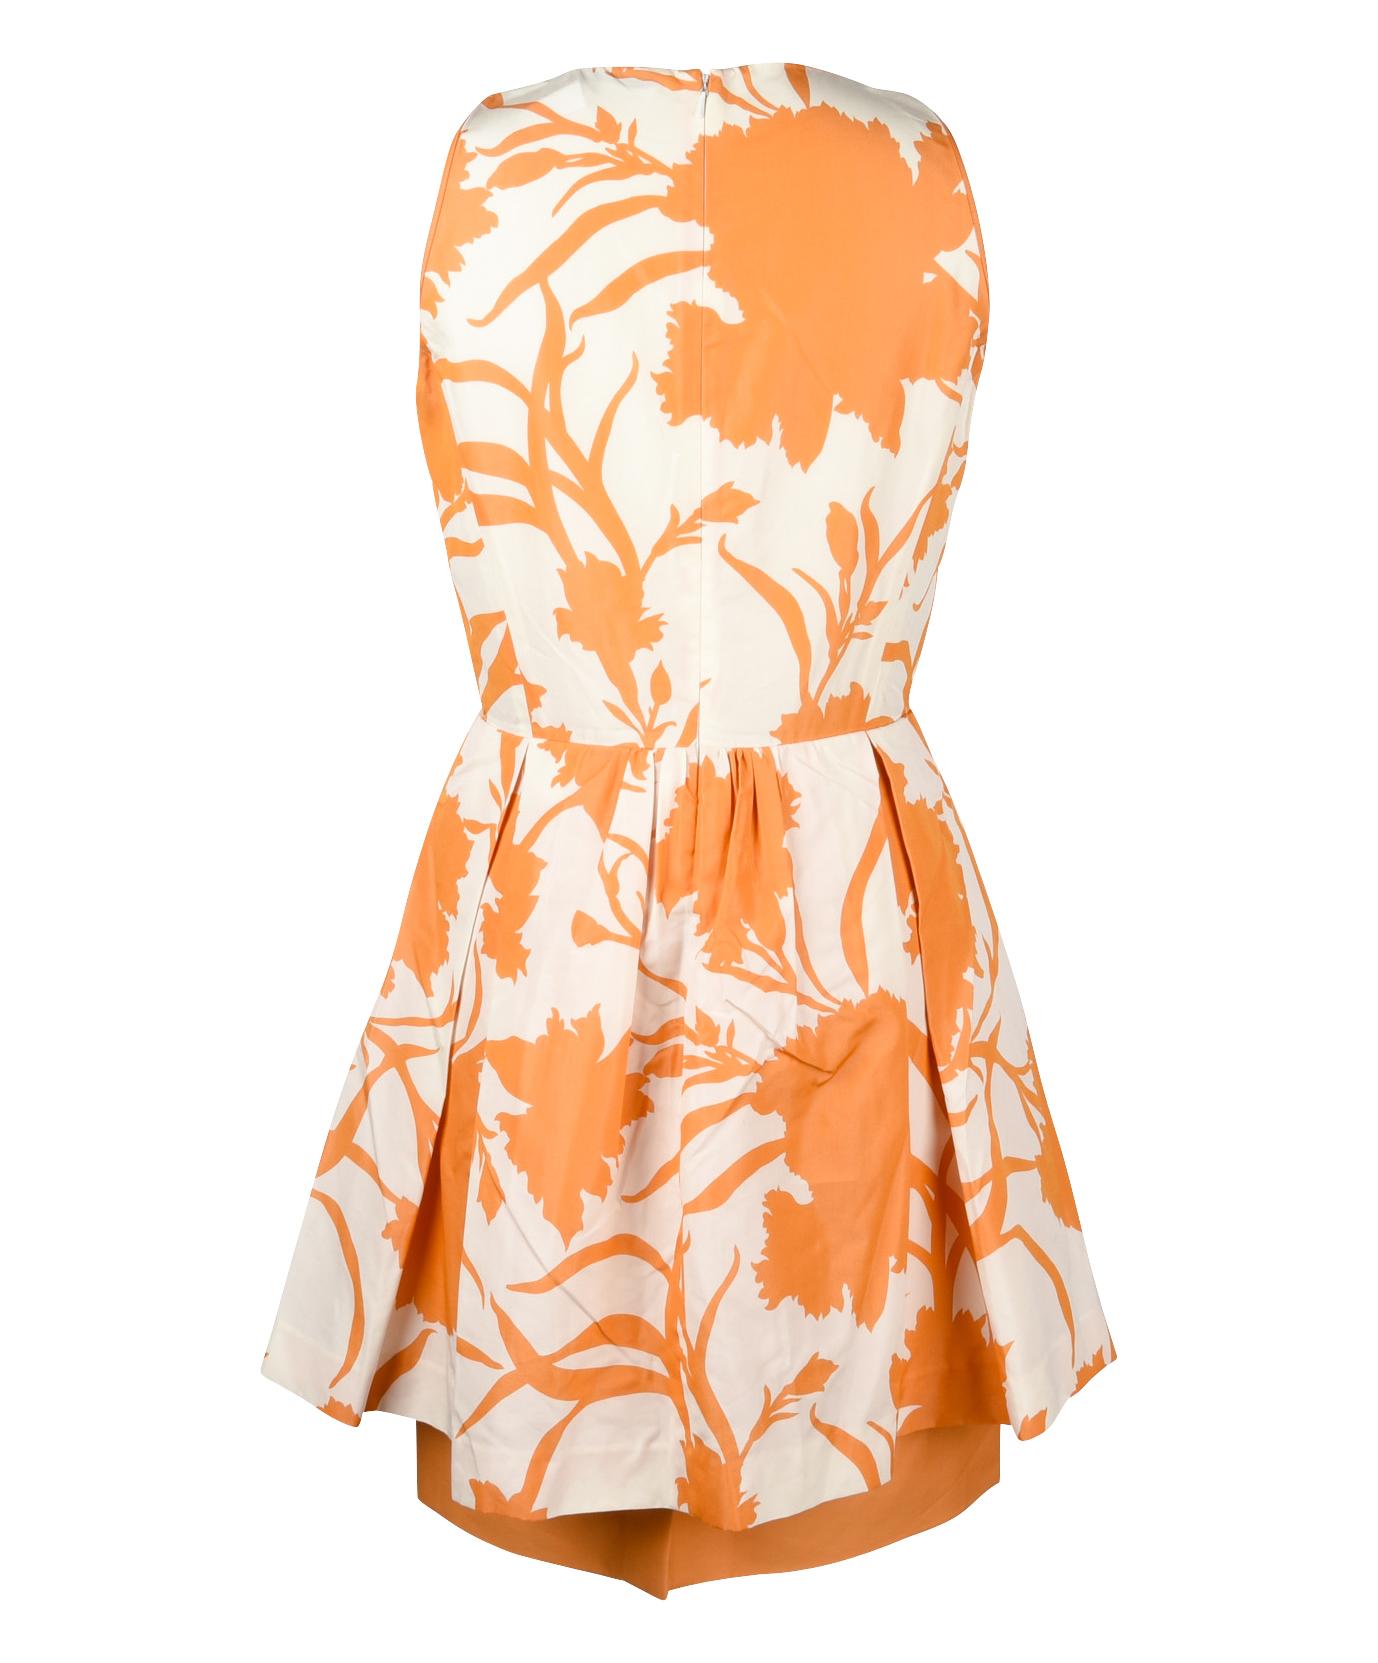 Orange Christian Dior Dress Pencil Dress w/ Pleated Overlay Cotton / Silk 40 / 8